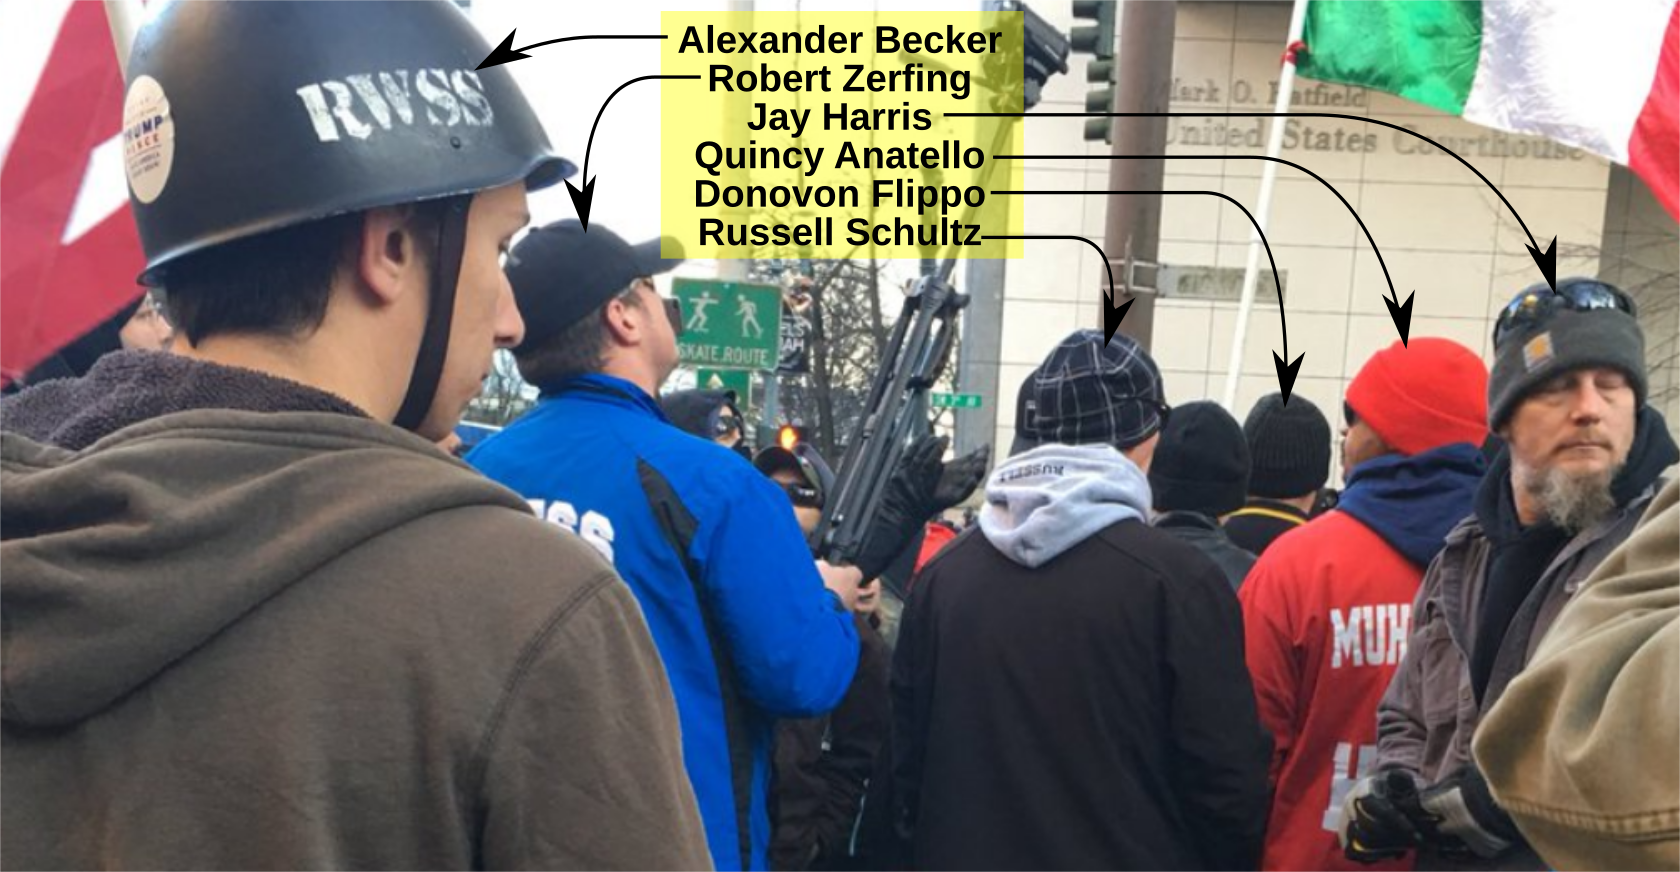 Quincy Anatello with neo-Nazi Alex Becker